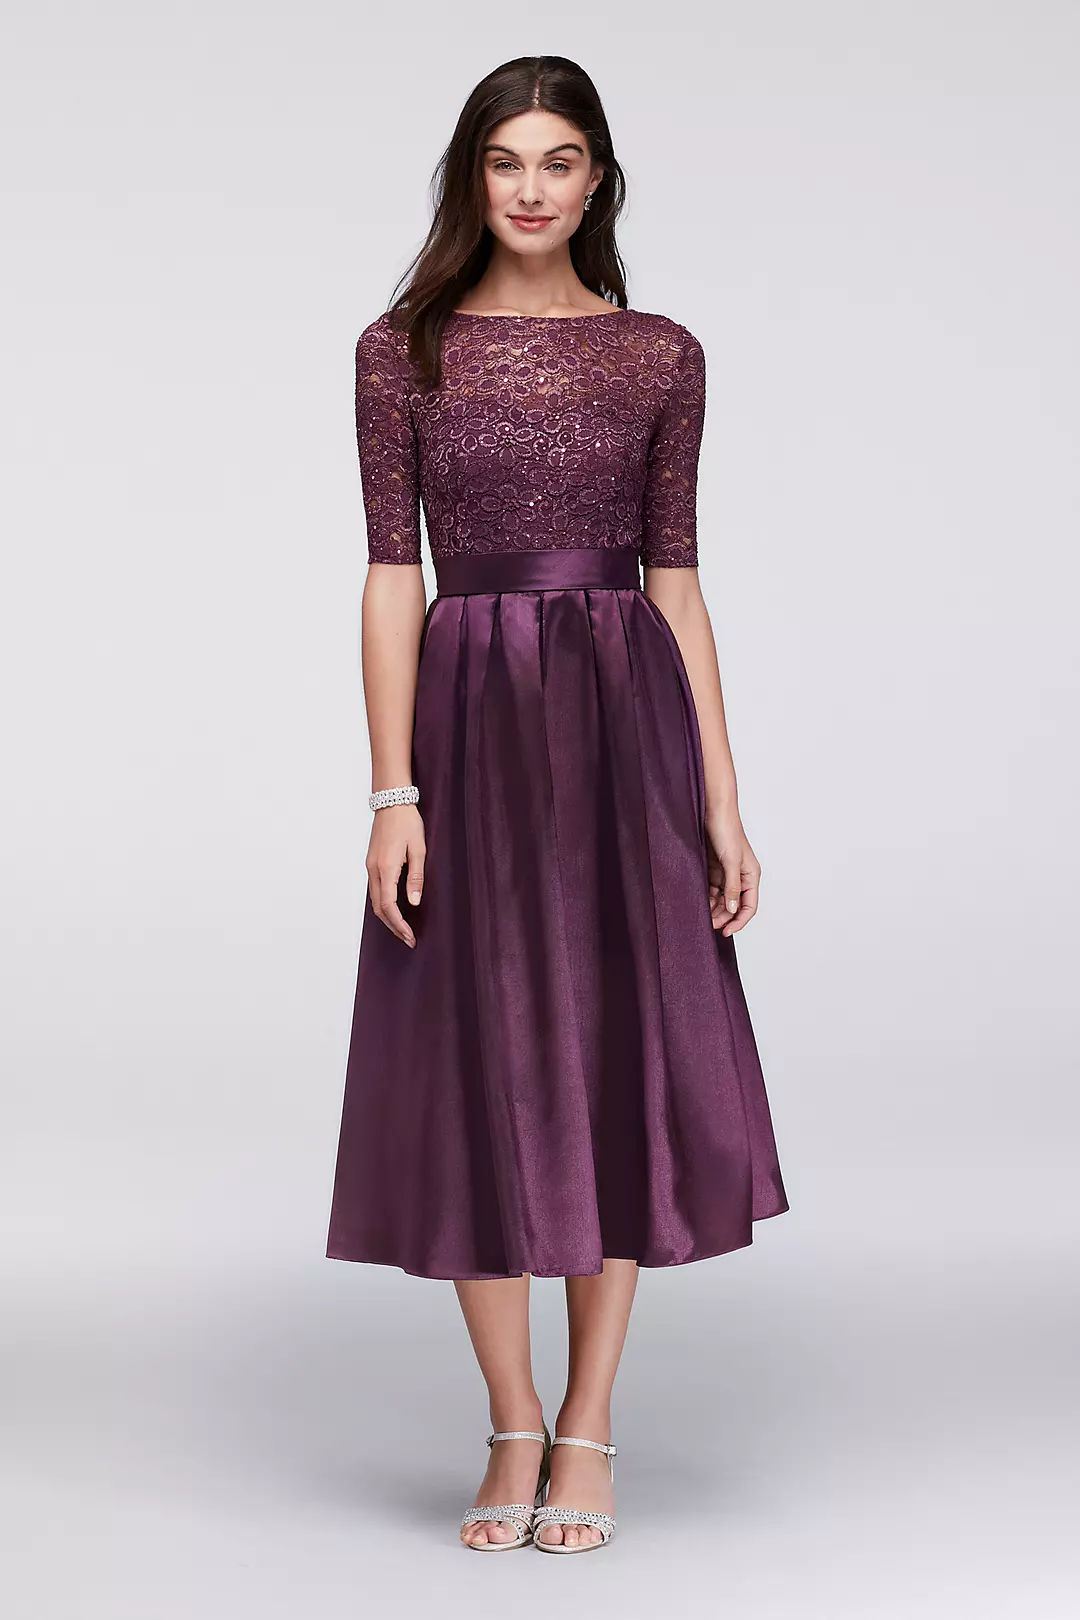 Lace and Satin Elbow-Sleeve Tea Length Dress | David's Bridal